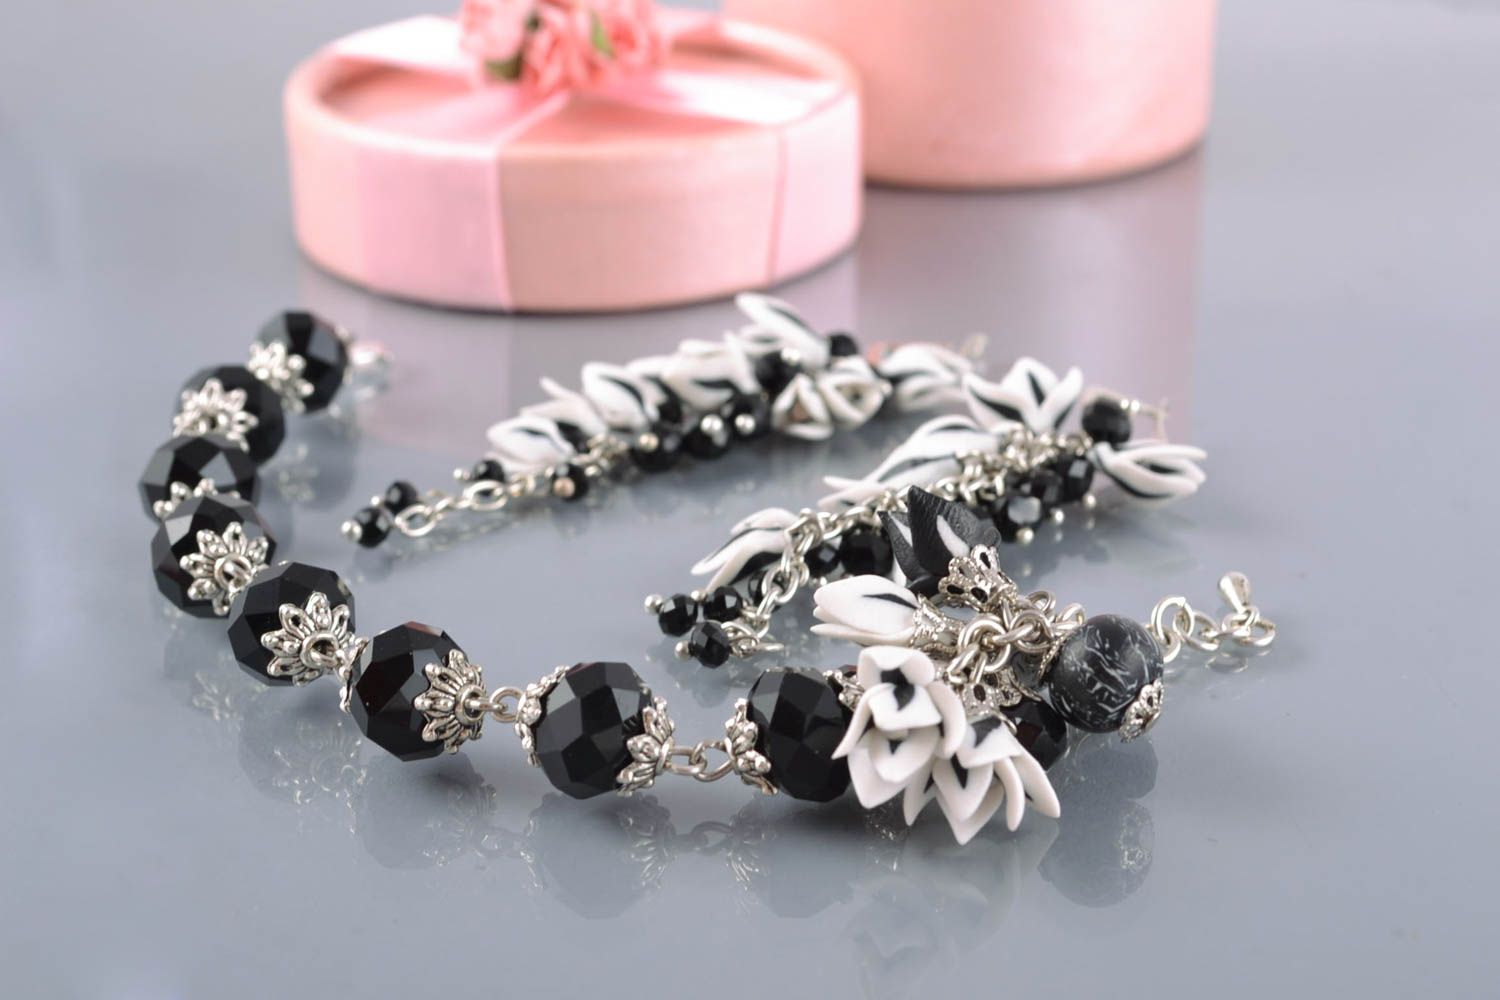 Black beads fashion chan bracelet and earrings set for mom photo 1